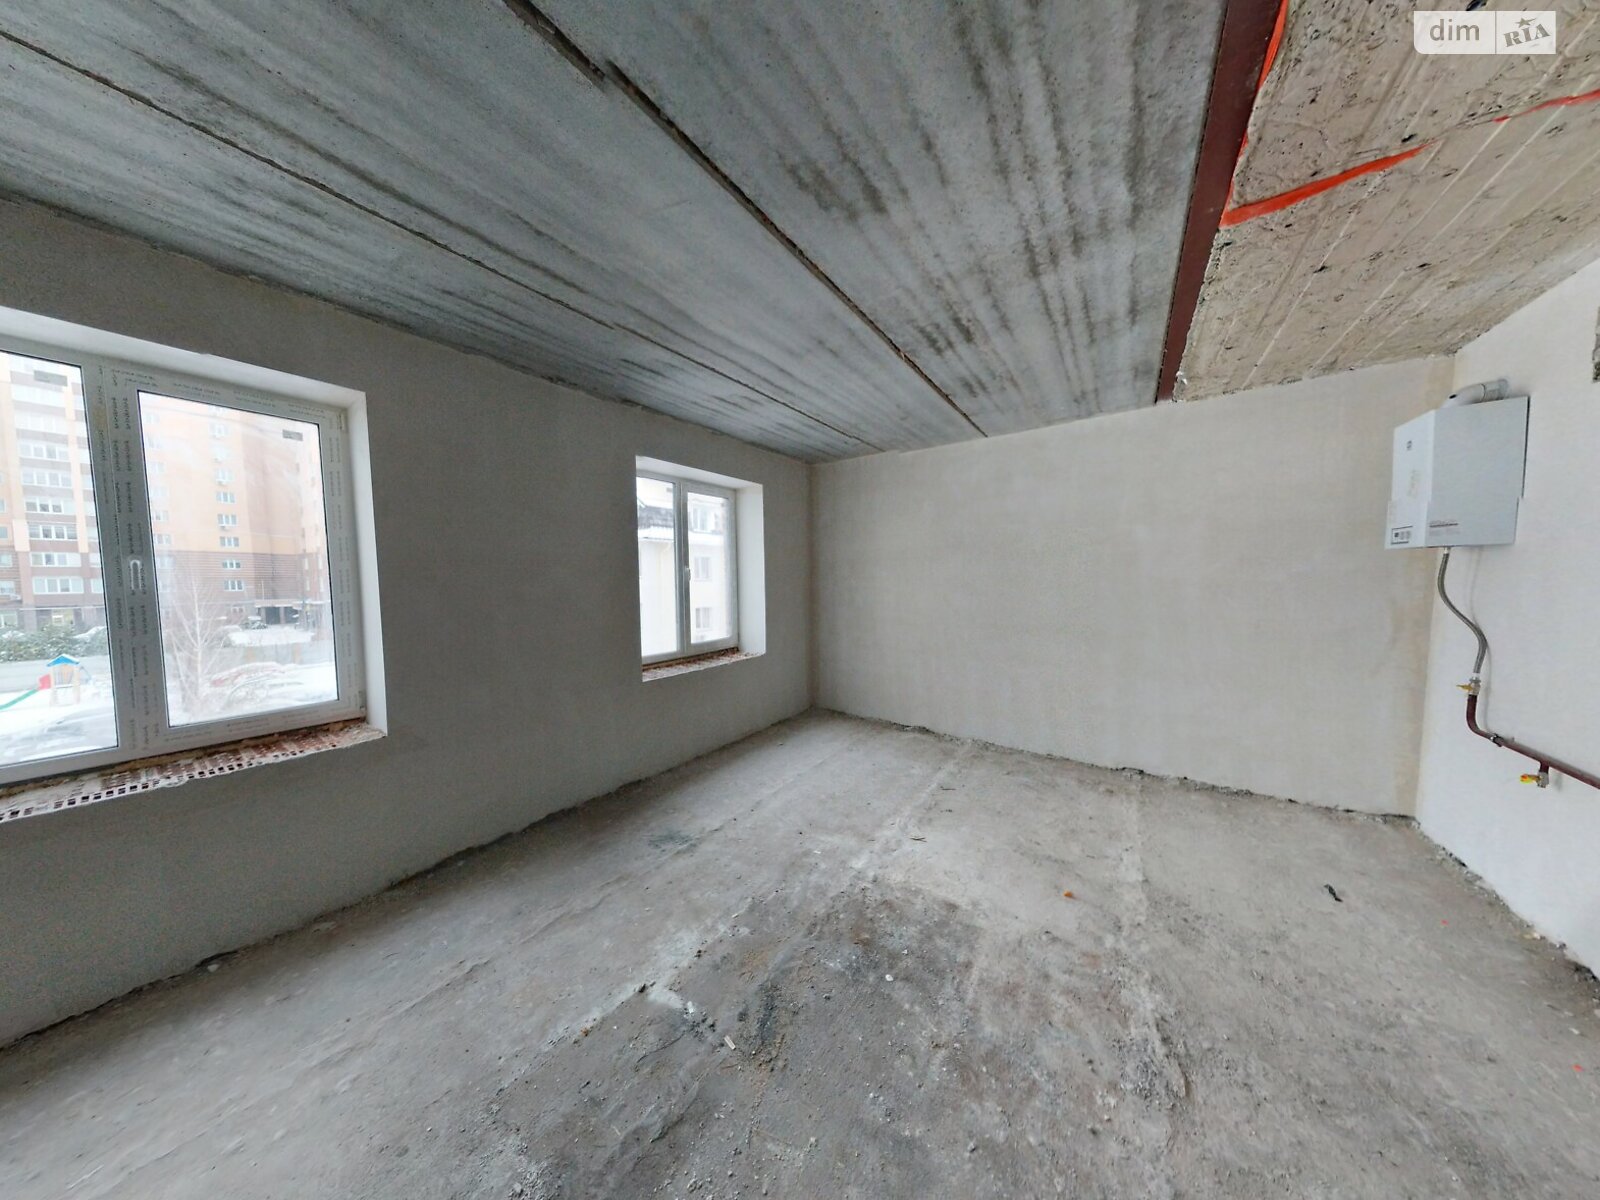 Продажа трехкомнатной квартиры в Ирпене, на ул. Лесная, фото 1